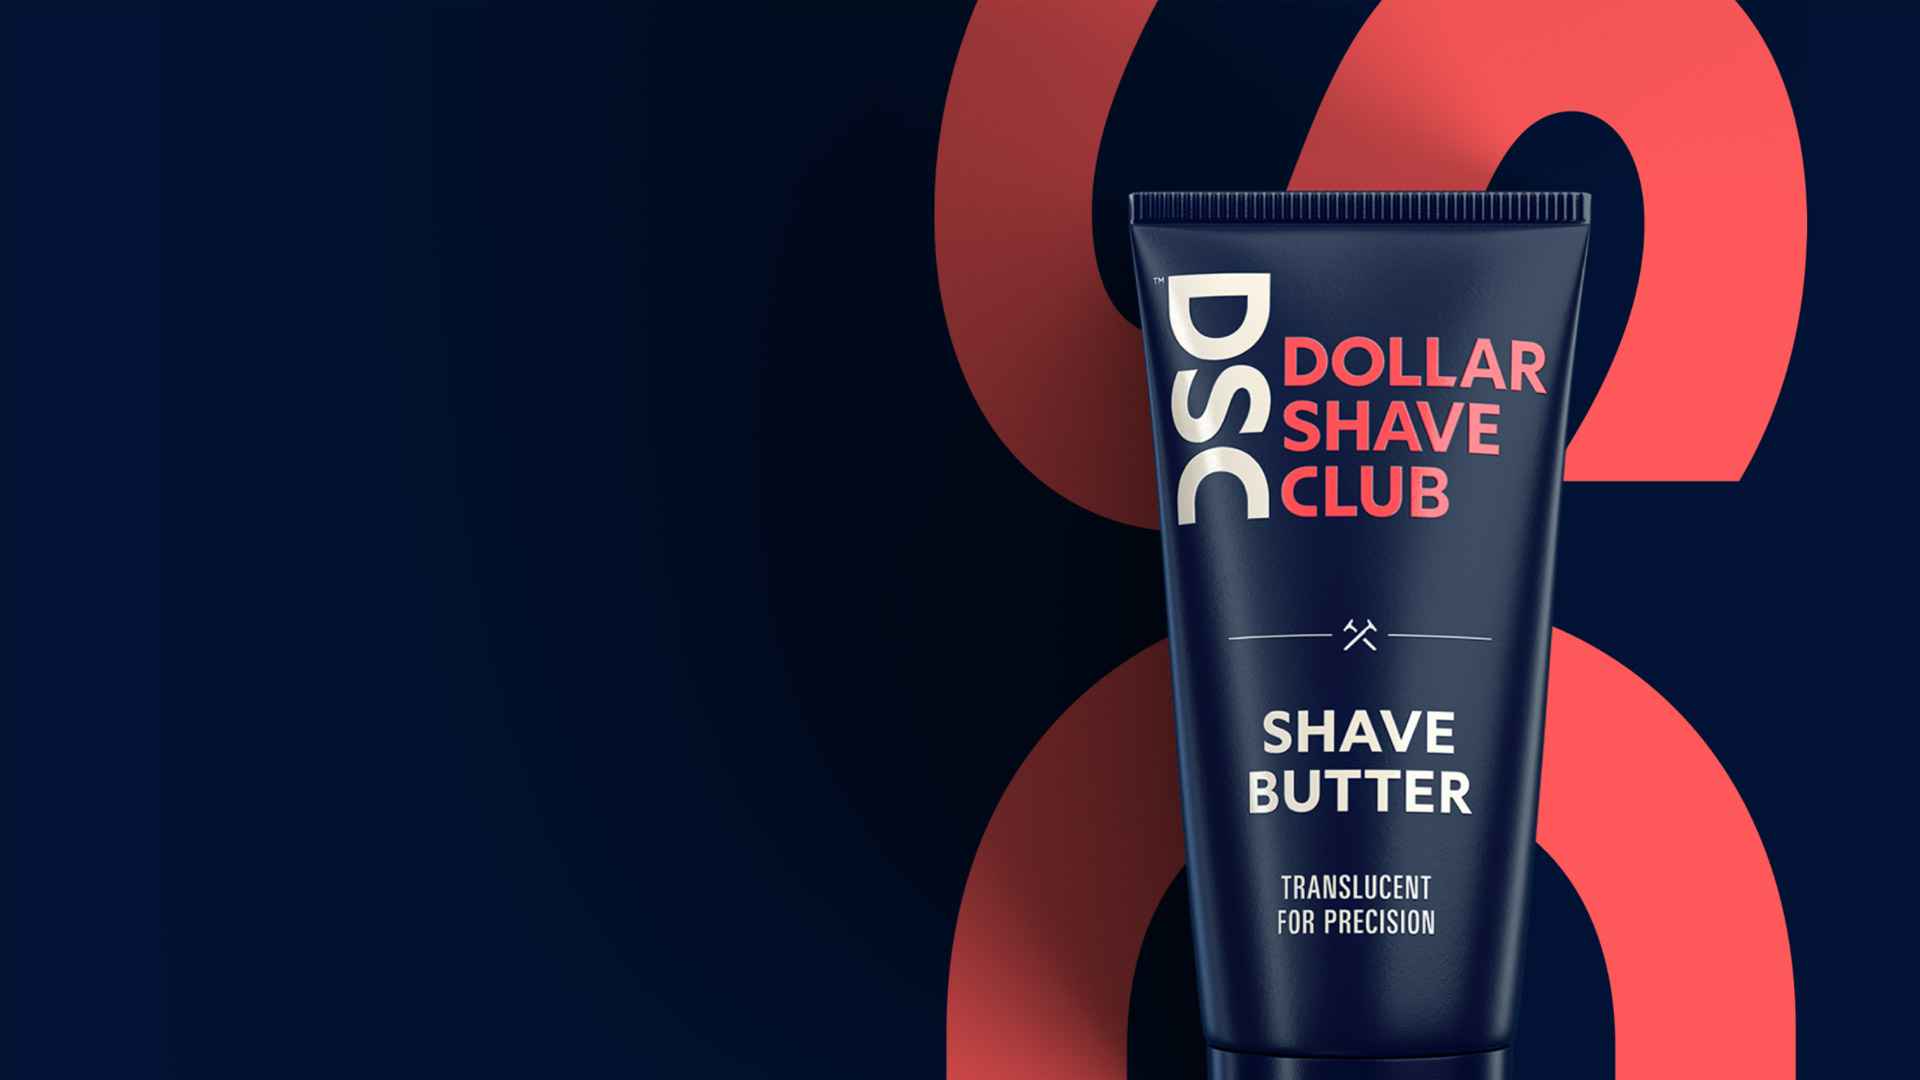 男士訂閱制個人護理品牌Dollar Shave Club 啟用新LOGO 7